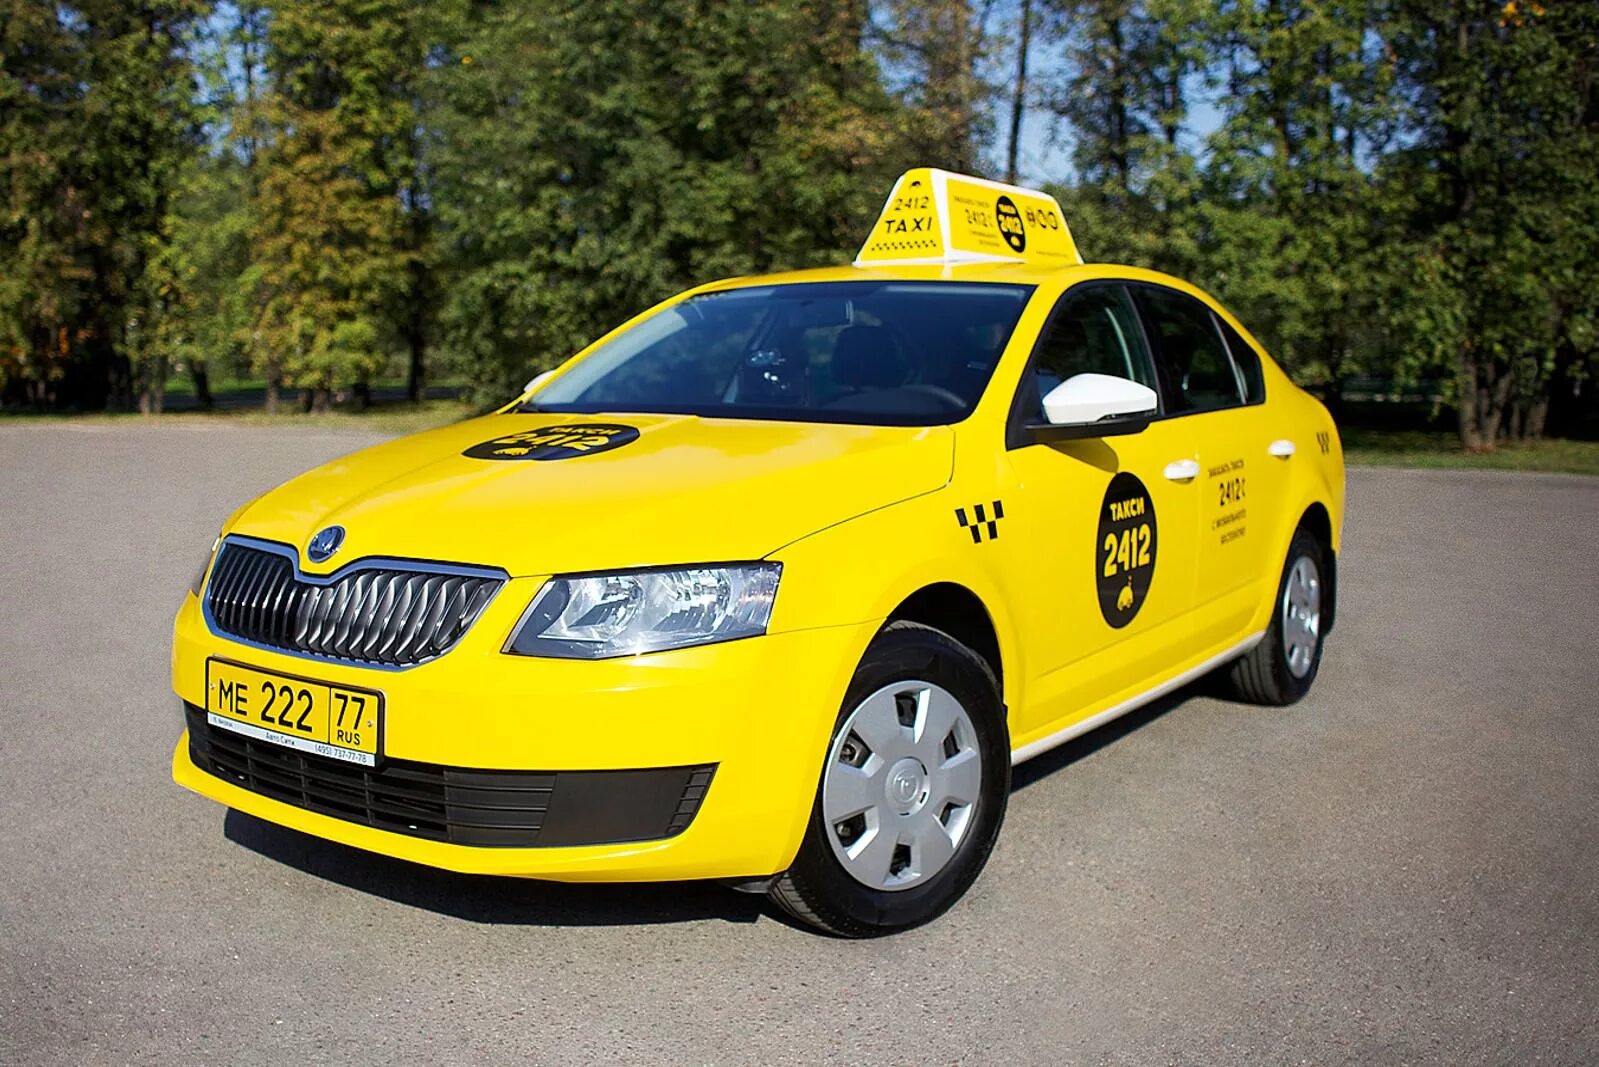 Фото такси машин. Машина "такси". Желтая машина такси. Машина такси белая. Такси комфорт машины.